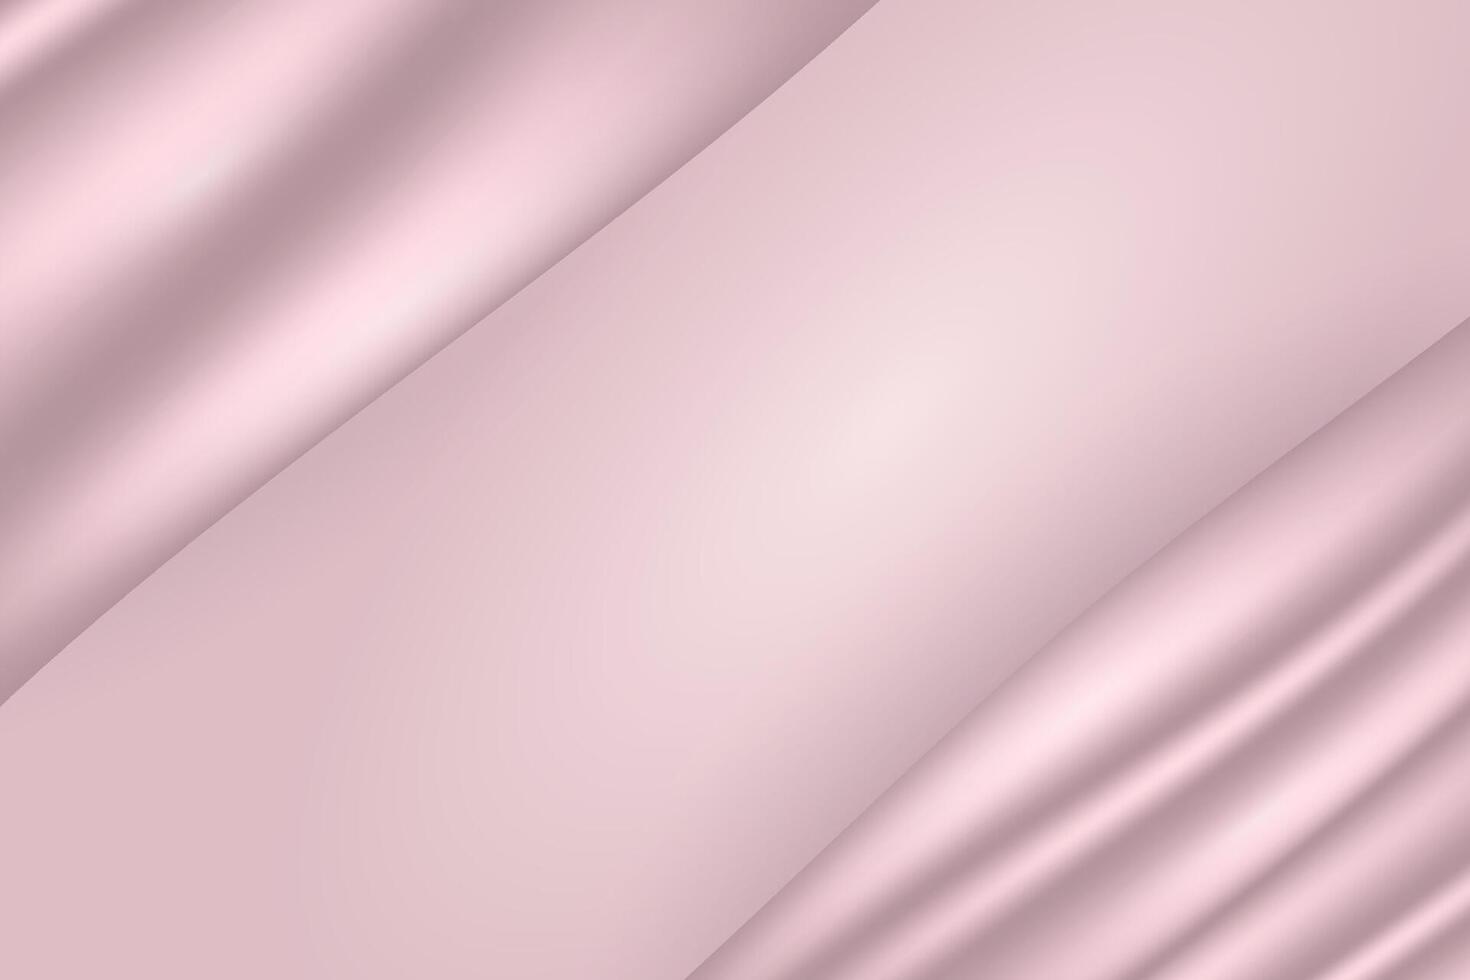 textura de seda, satín, pañería tela en lujoso antecedentes. cortina, material para cortina delicado rosado beige vector